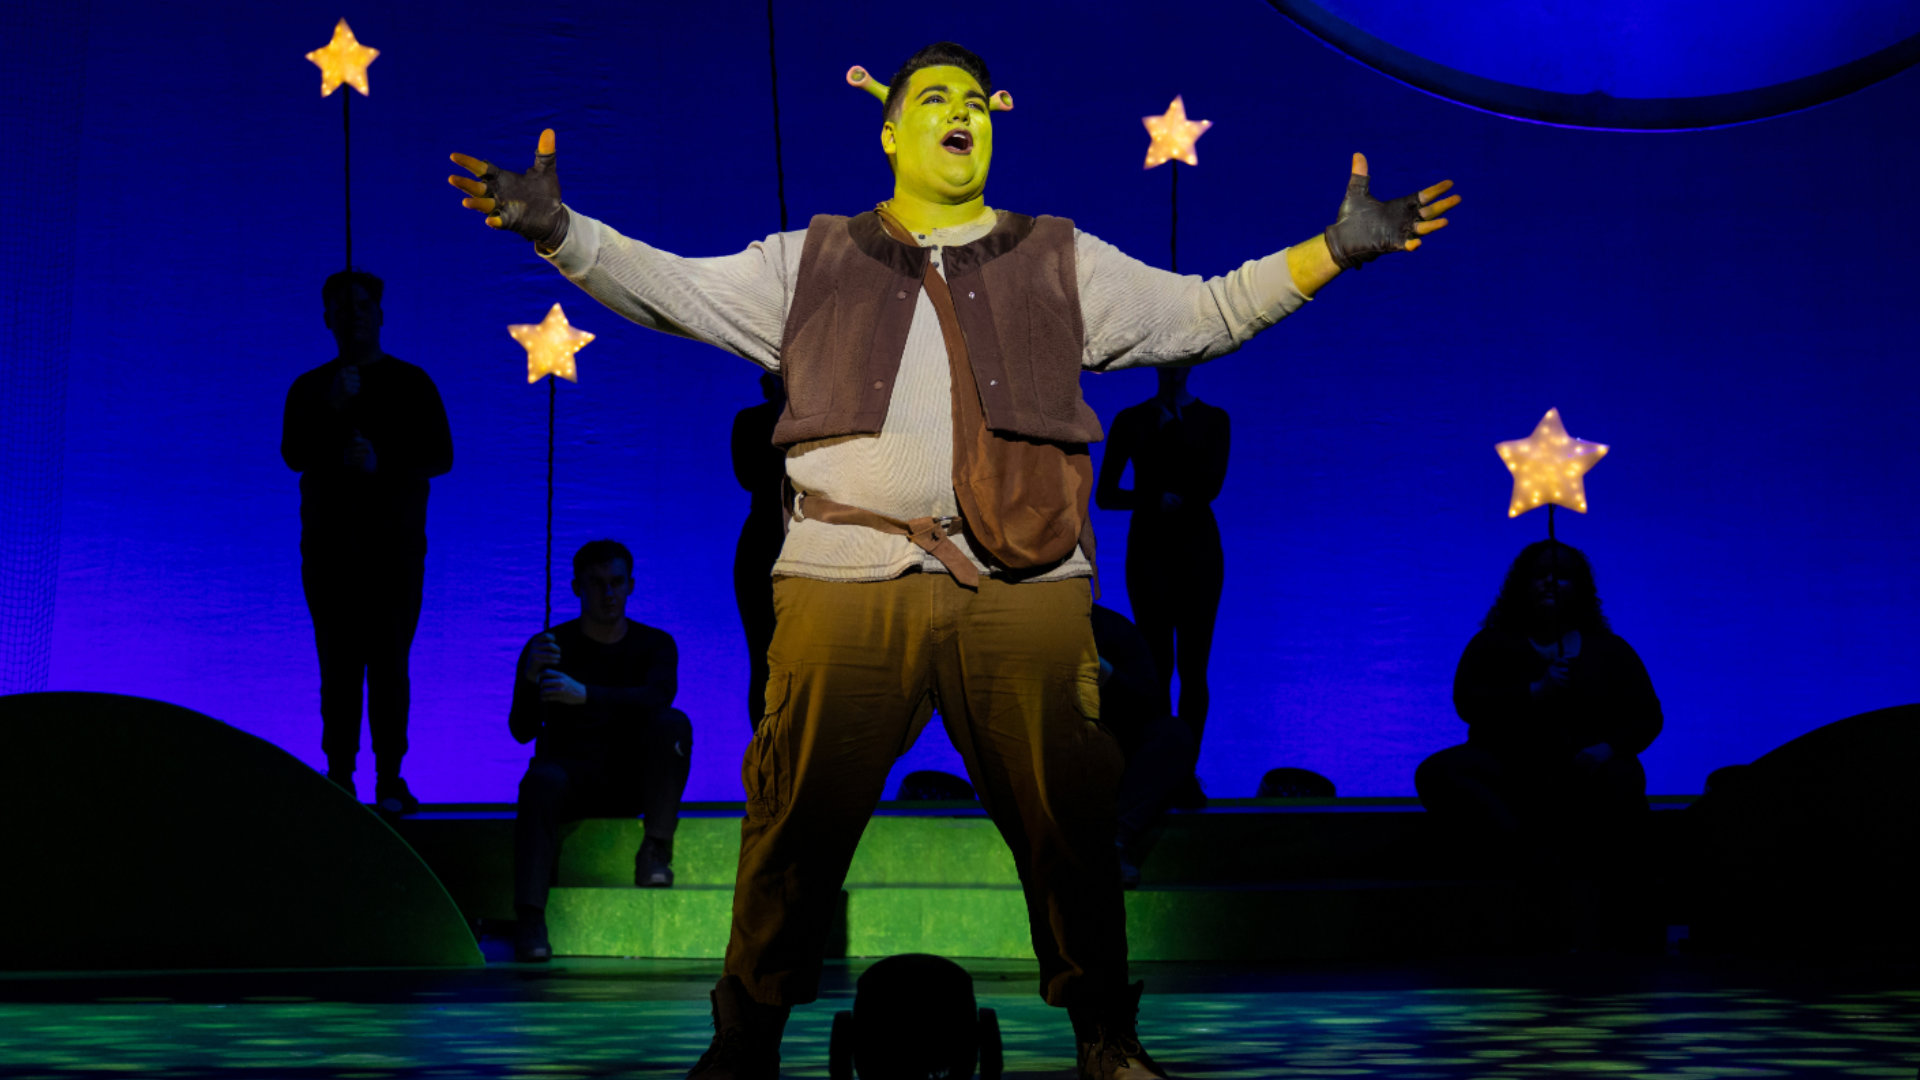 Nicholas Hambruch as Shrek